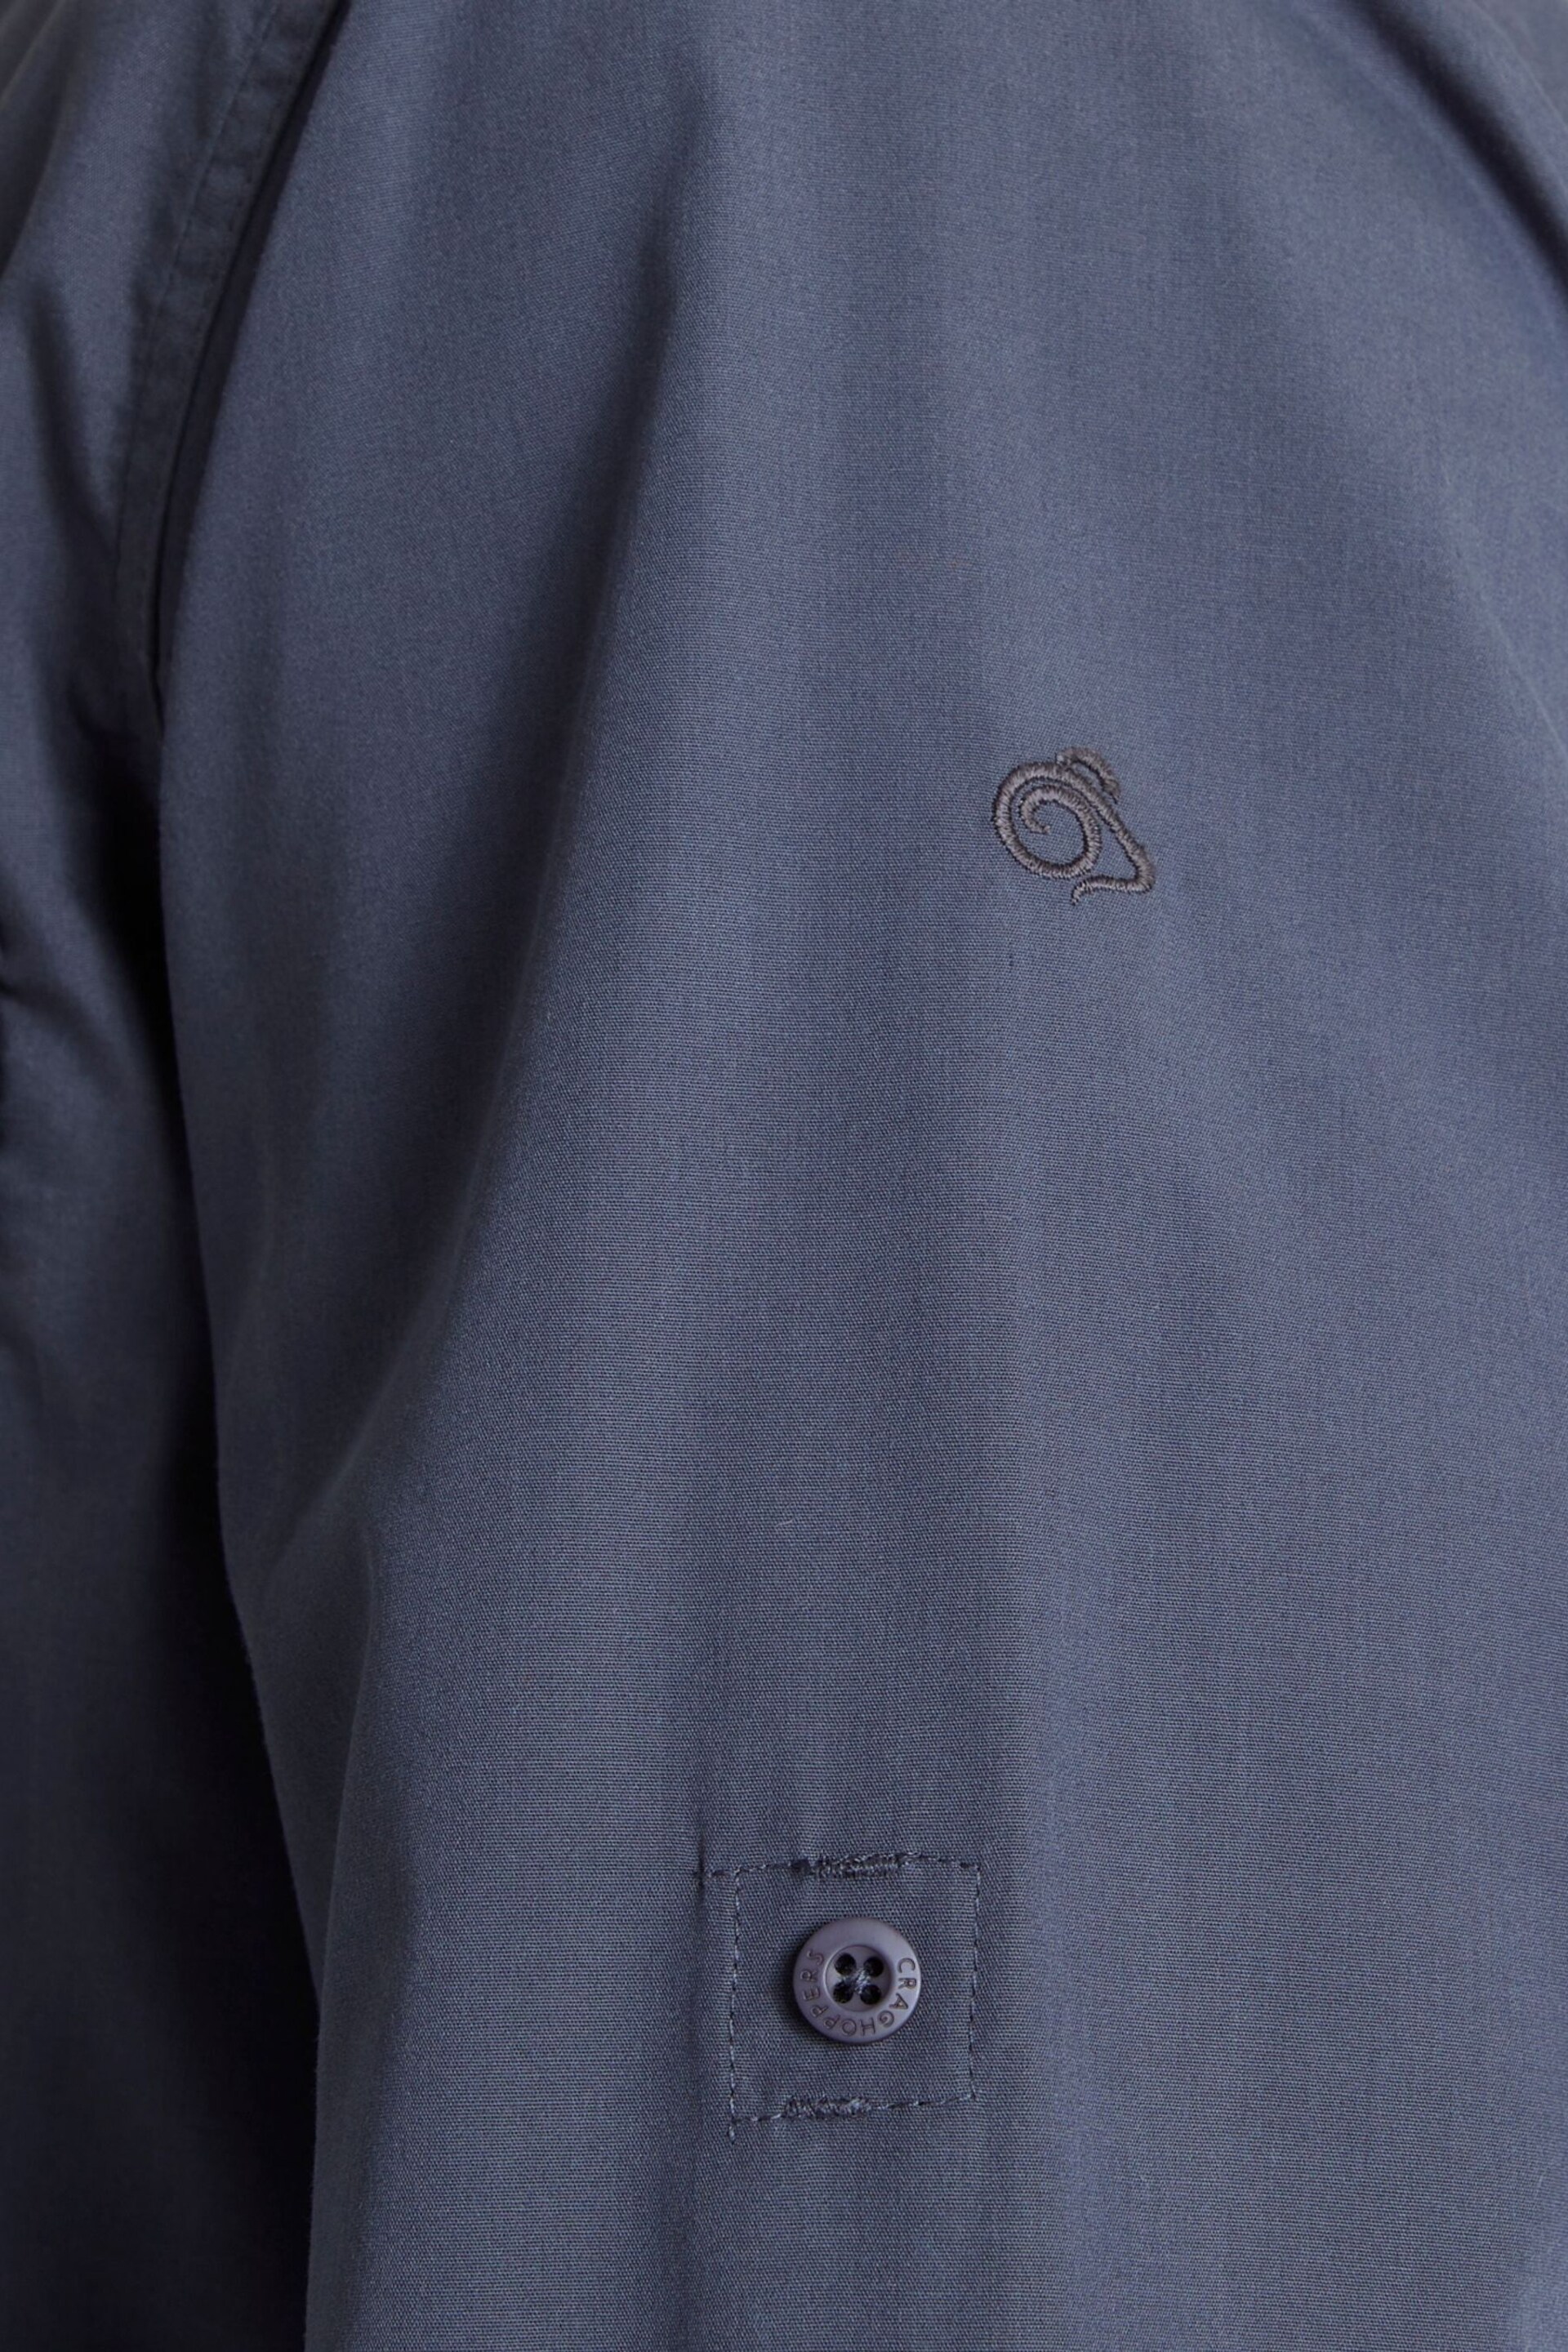 Craghoppers Blue Kiwi Long Sleeved Shirt - Image 3 of 4